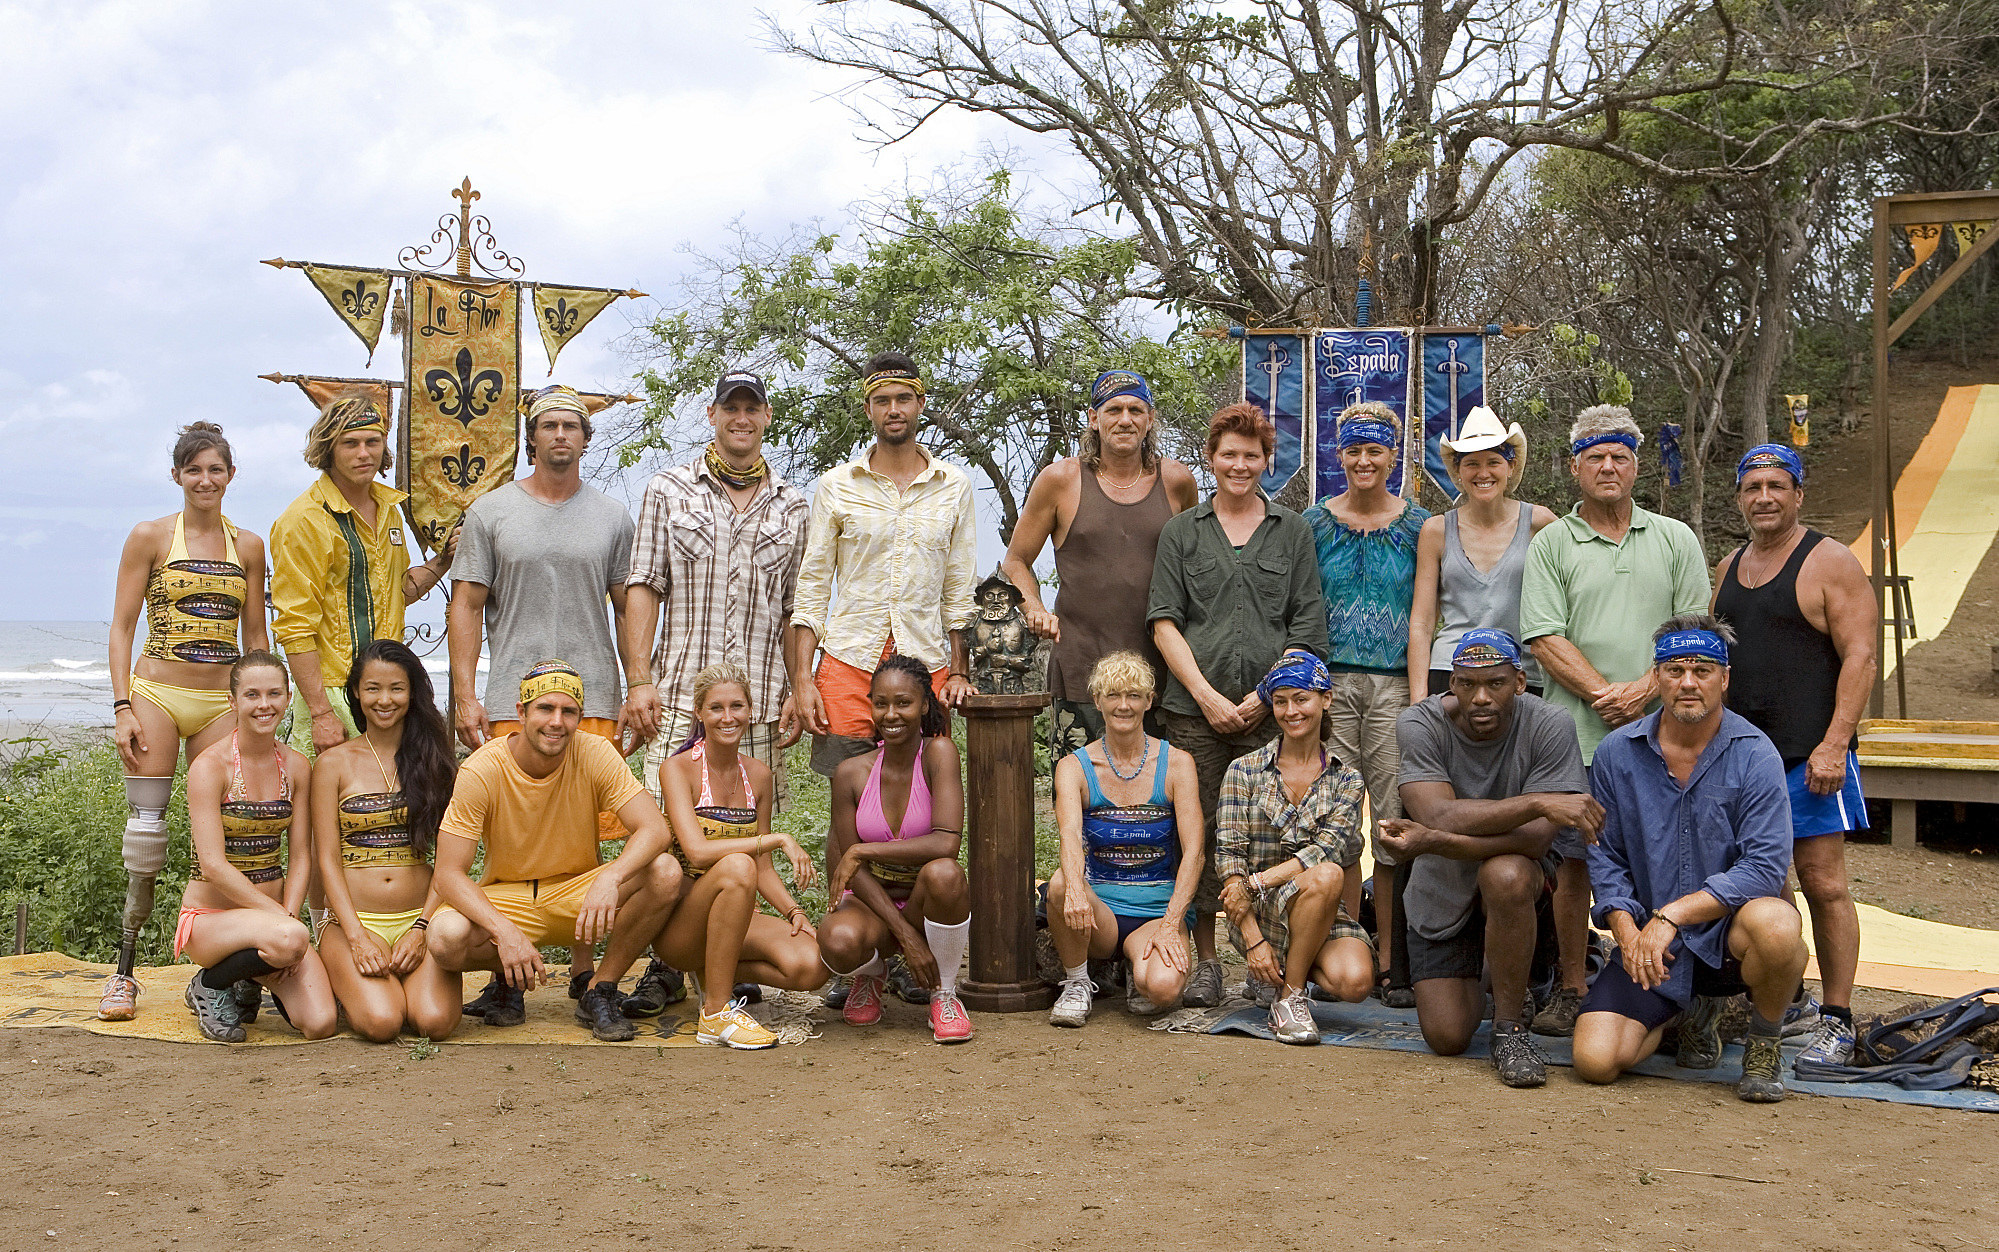 The cast of Survivor: Nicaragua